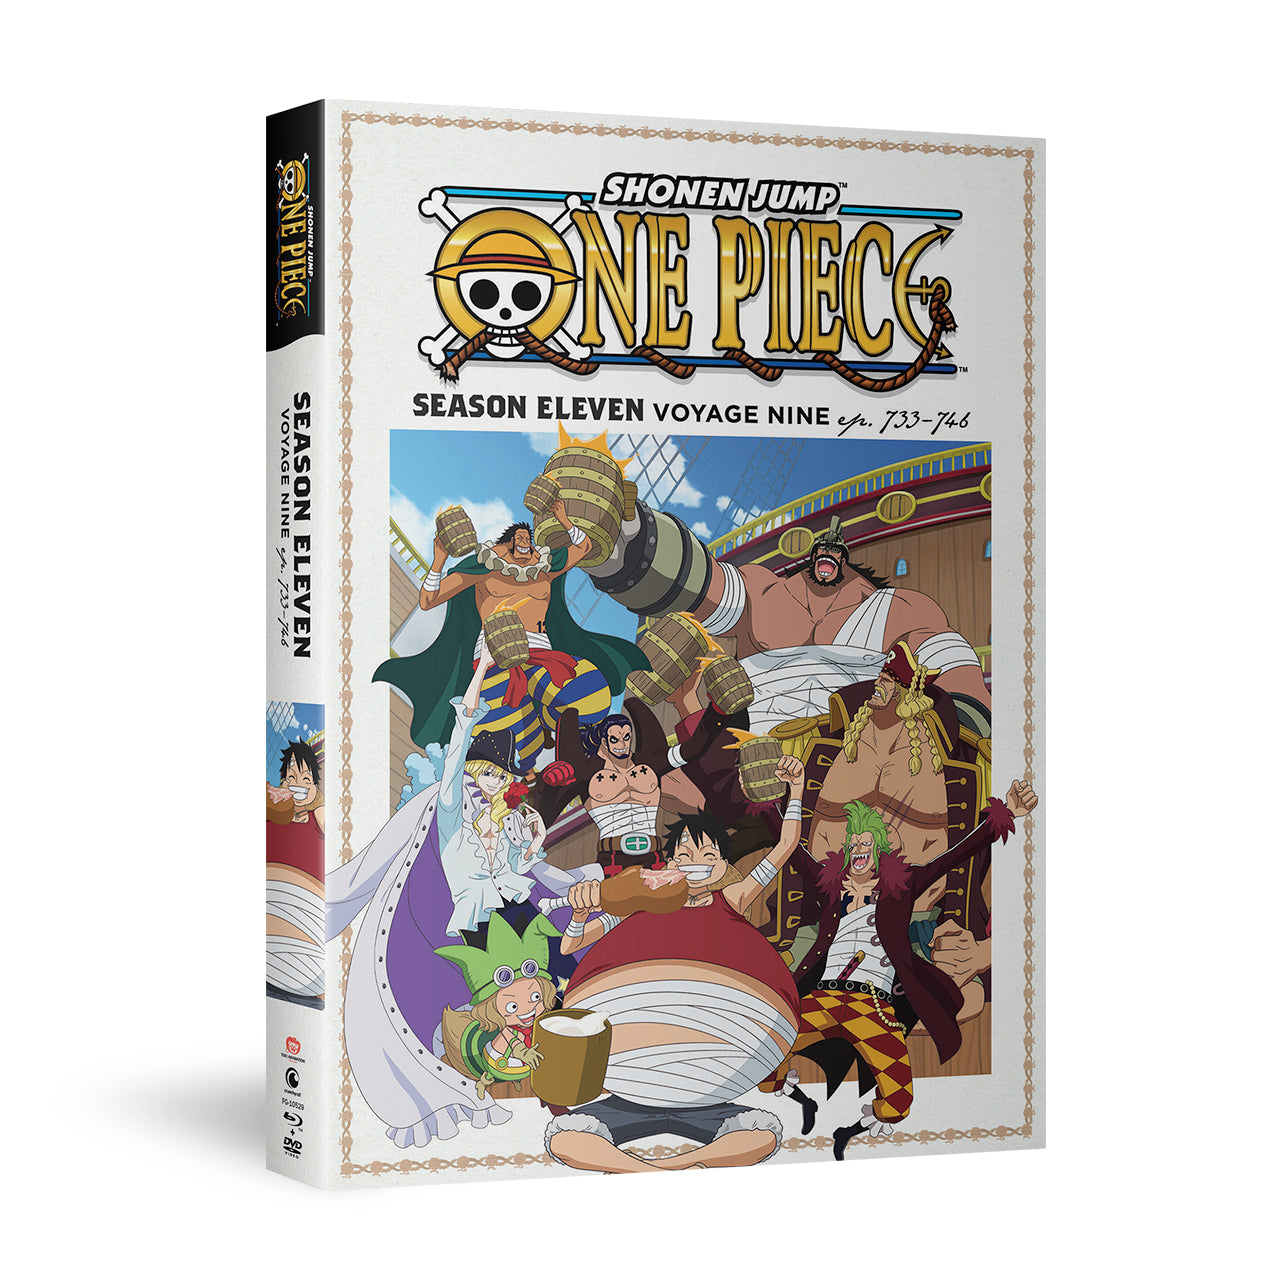 One Piece - Season 11 Voyage 9 - BD/DVD image count 1